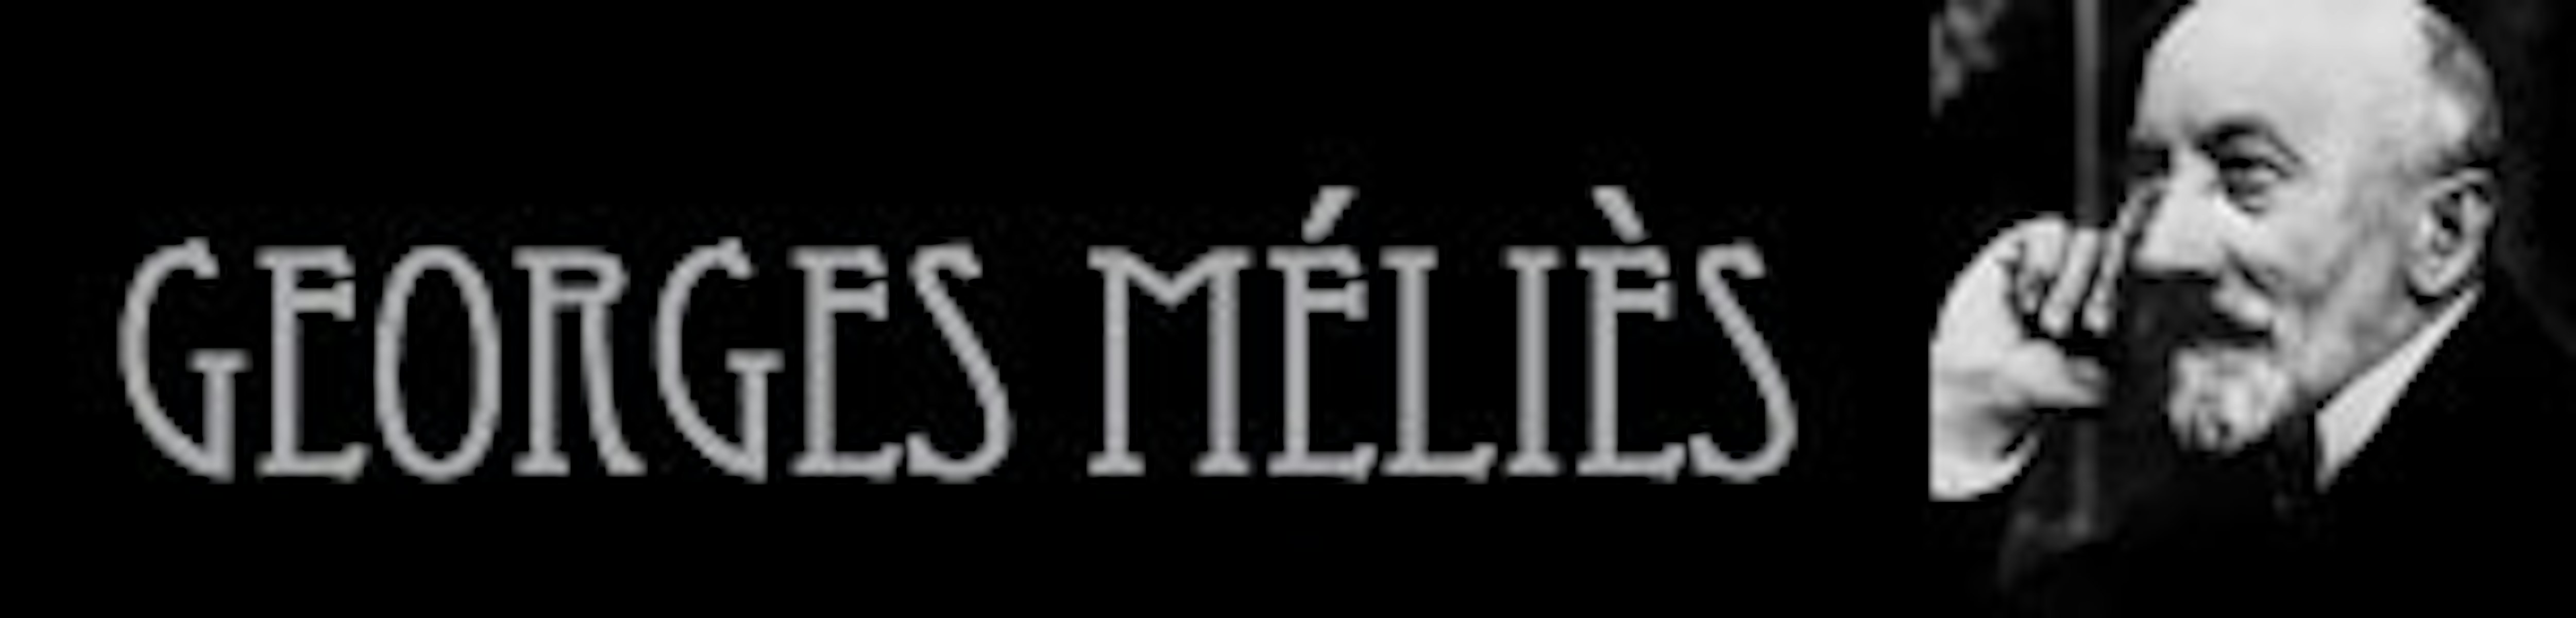 George Méliès Collection logo